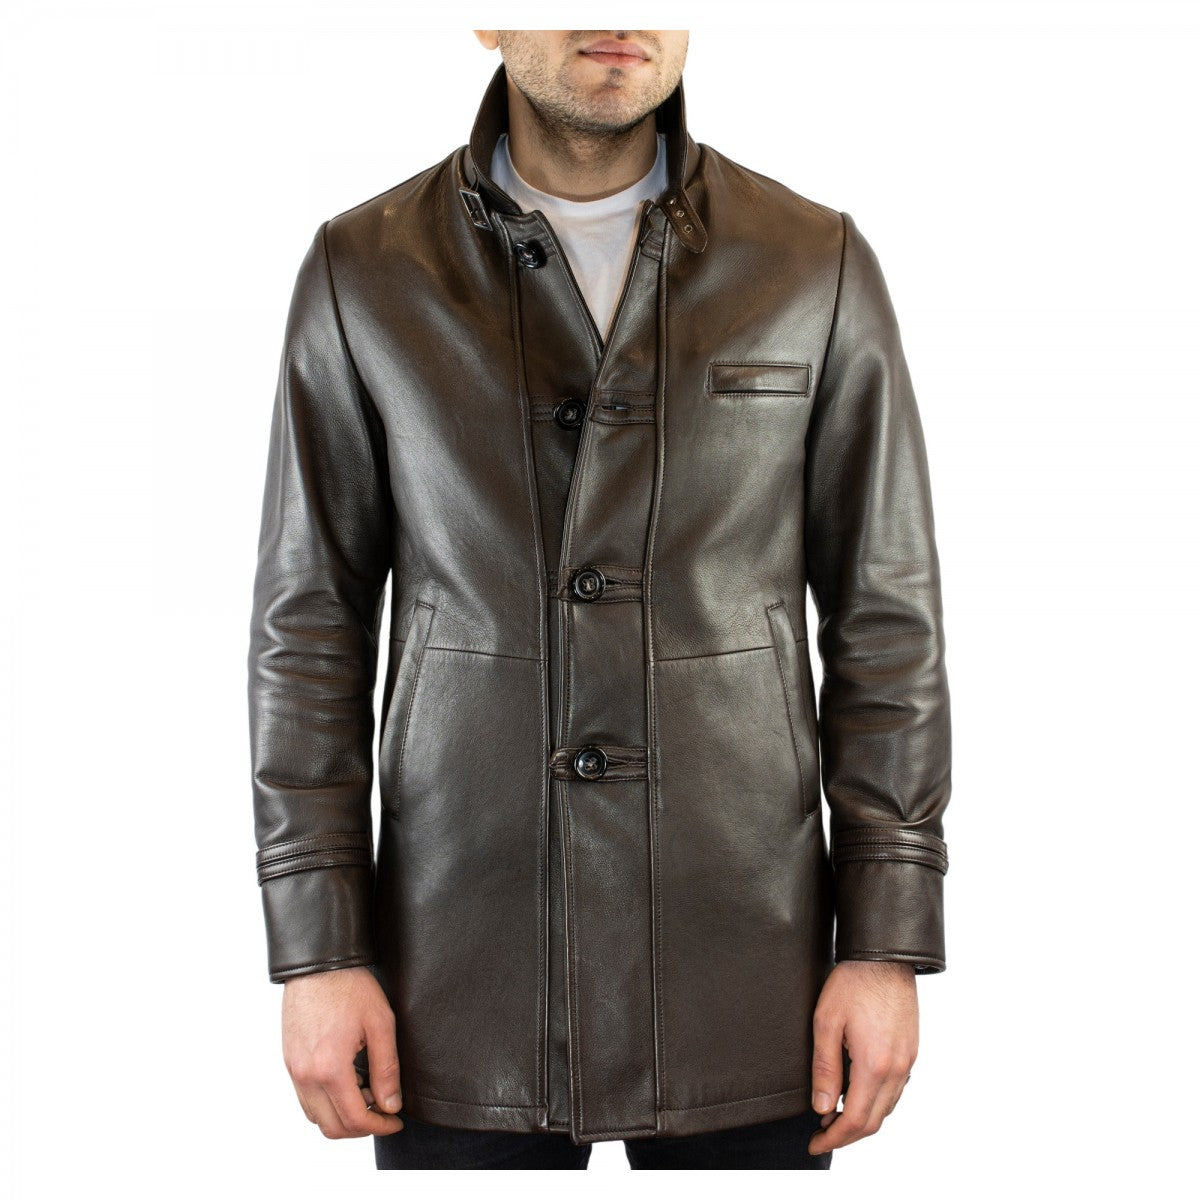 Rodrigo formal jacket for men handmade in dark brown LEATHER lambskin